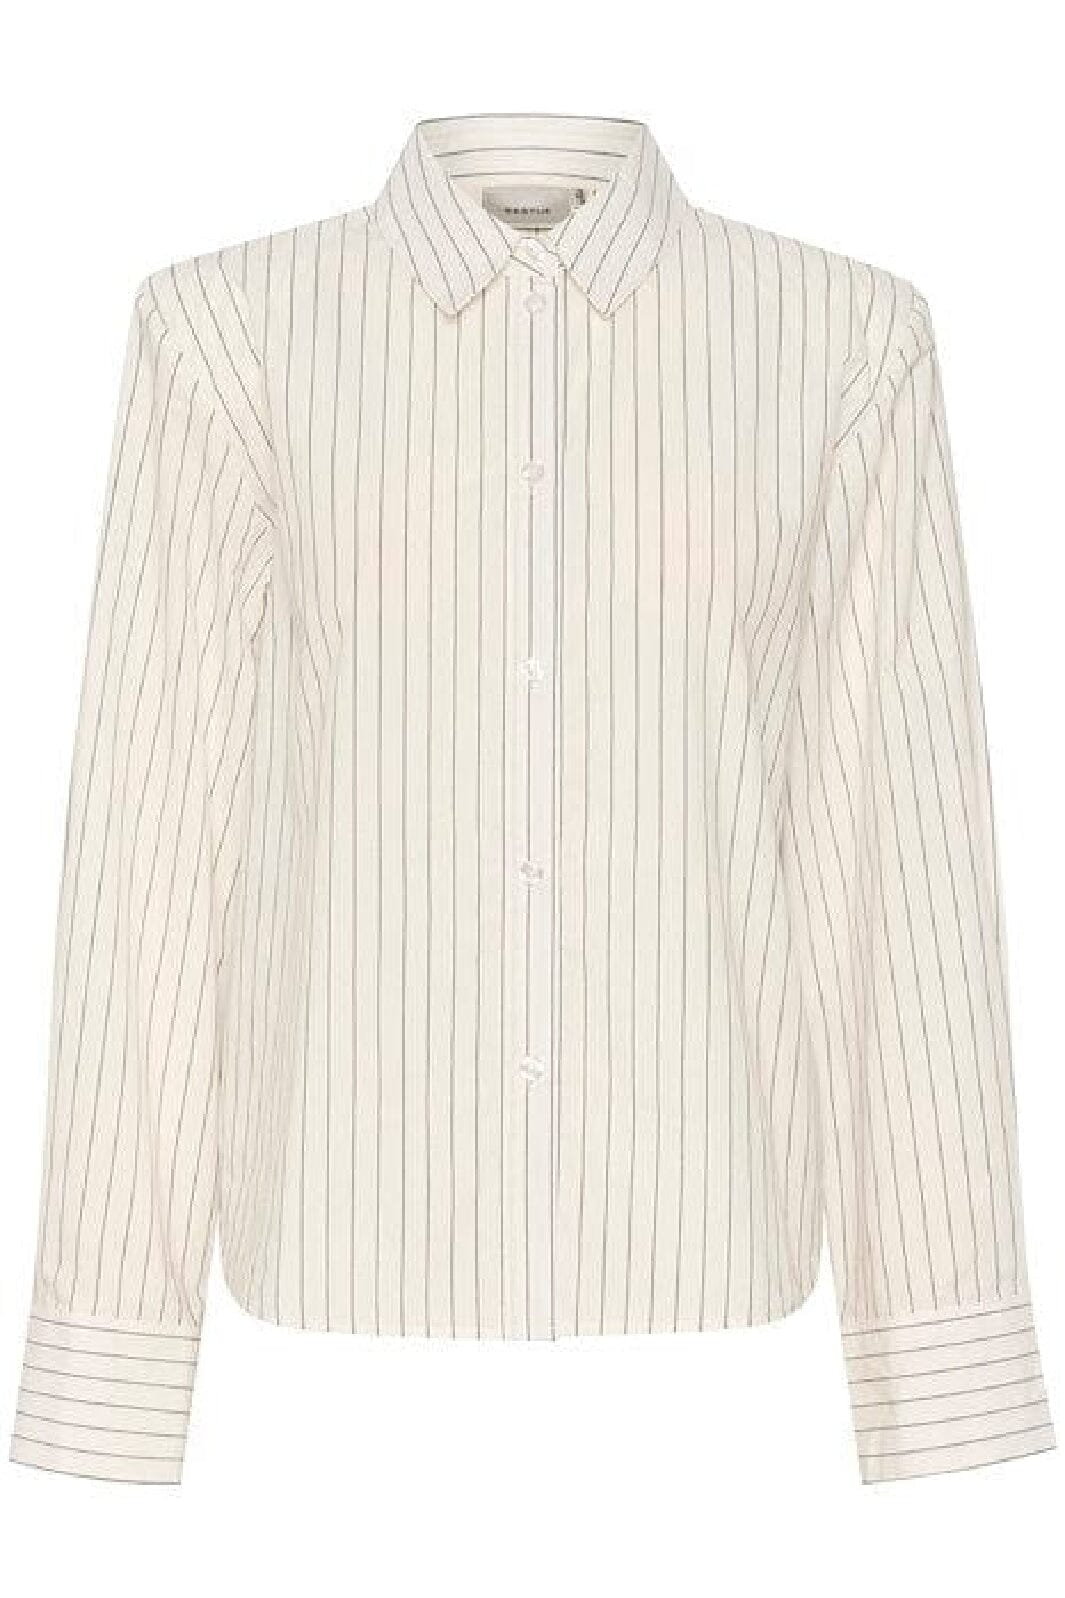 Gestuz - CymaGZ LS shirt - White pinstripe Skjorter 